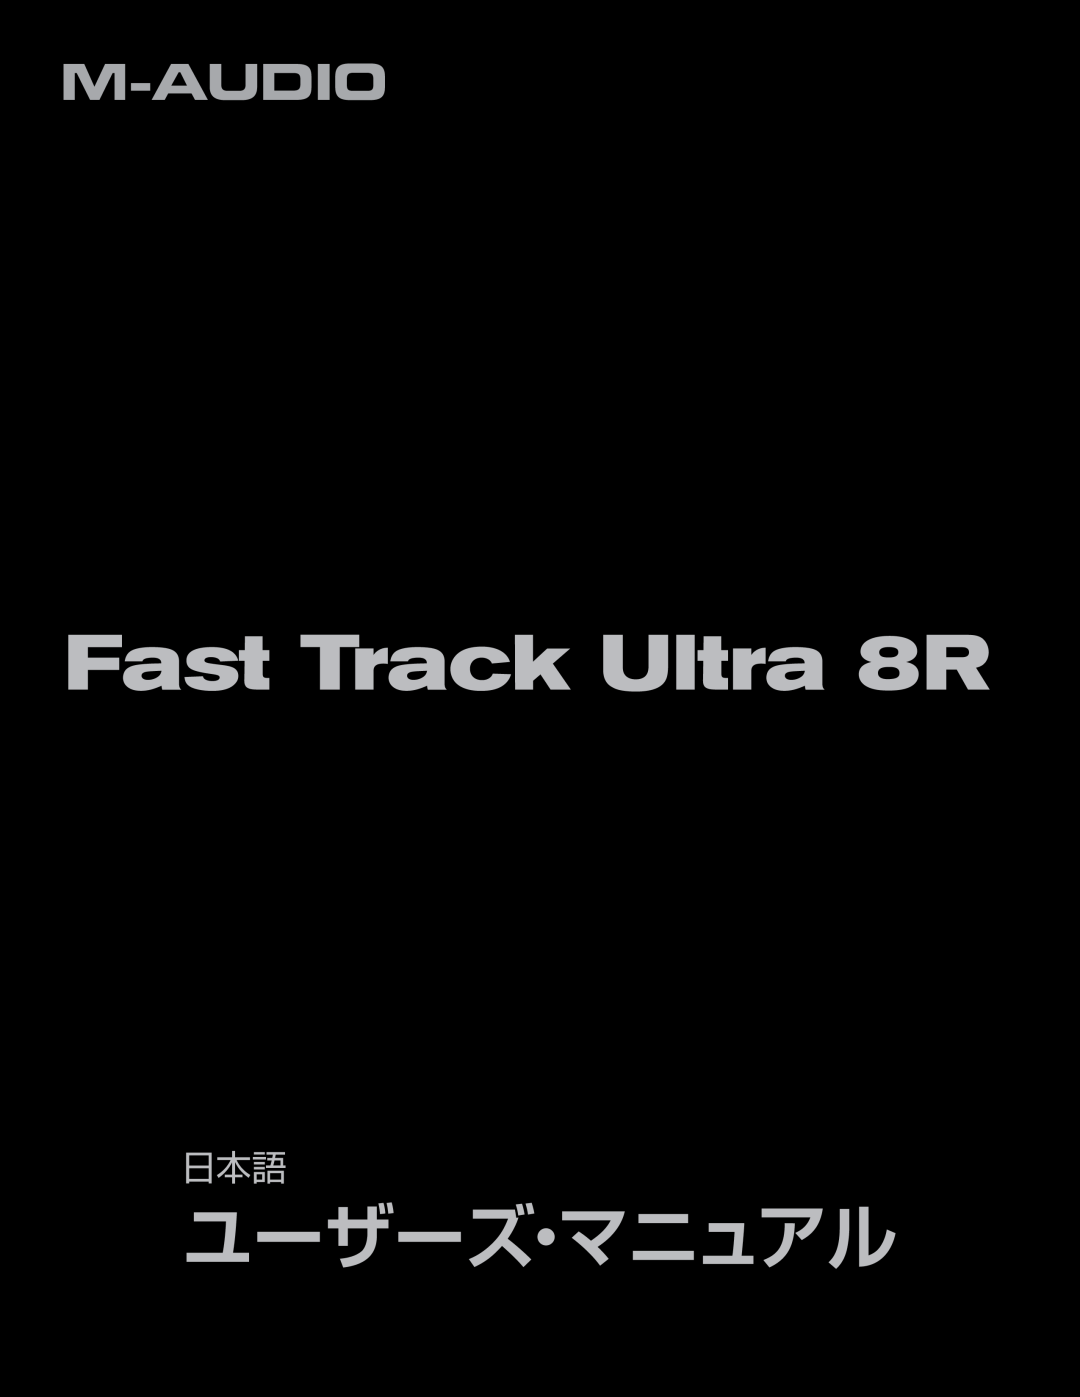 M-Audio manual Fast Track Ultra 8R, ユーザーズ・マニュアル 